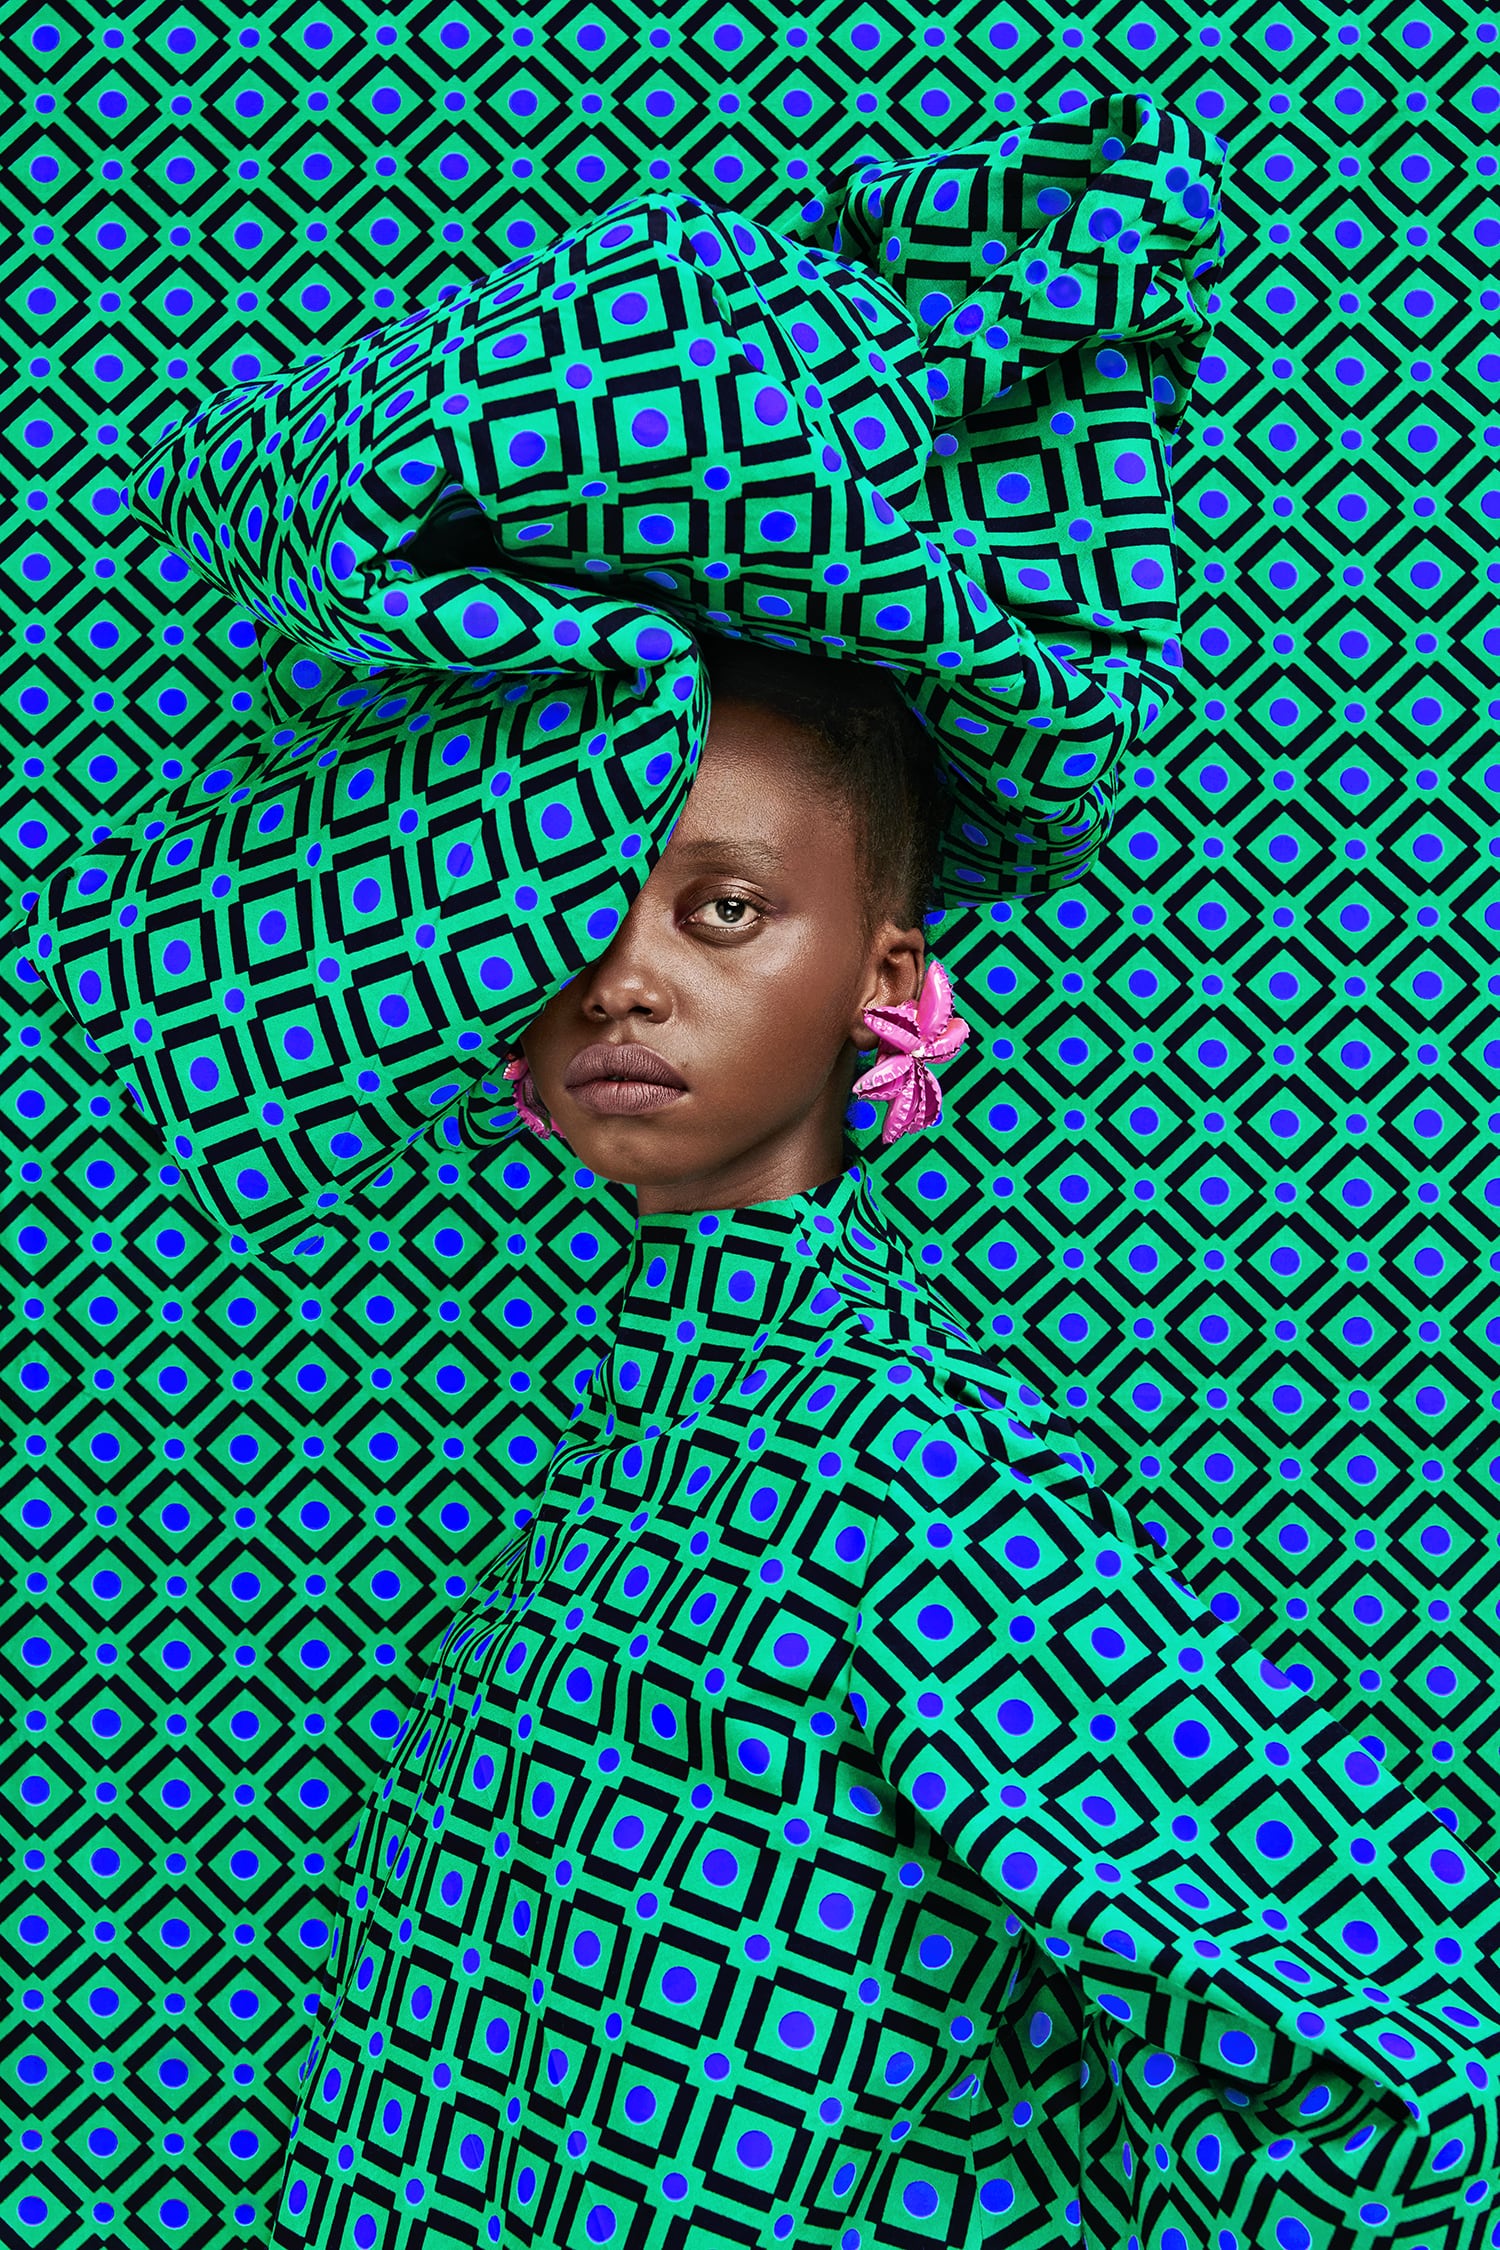 Vibrant Textiles and Repurposed Eyewear Camouflage on Thandiwe Muriu's Portraits